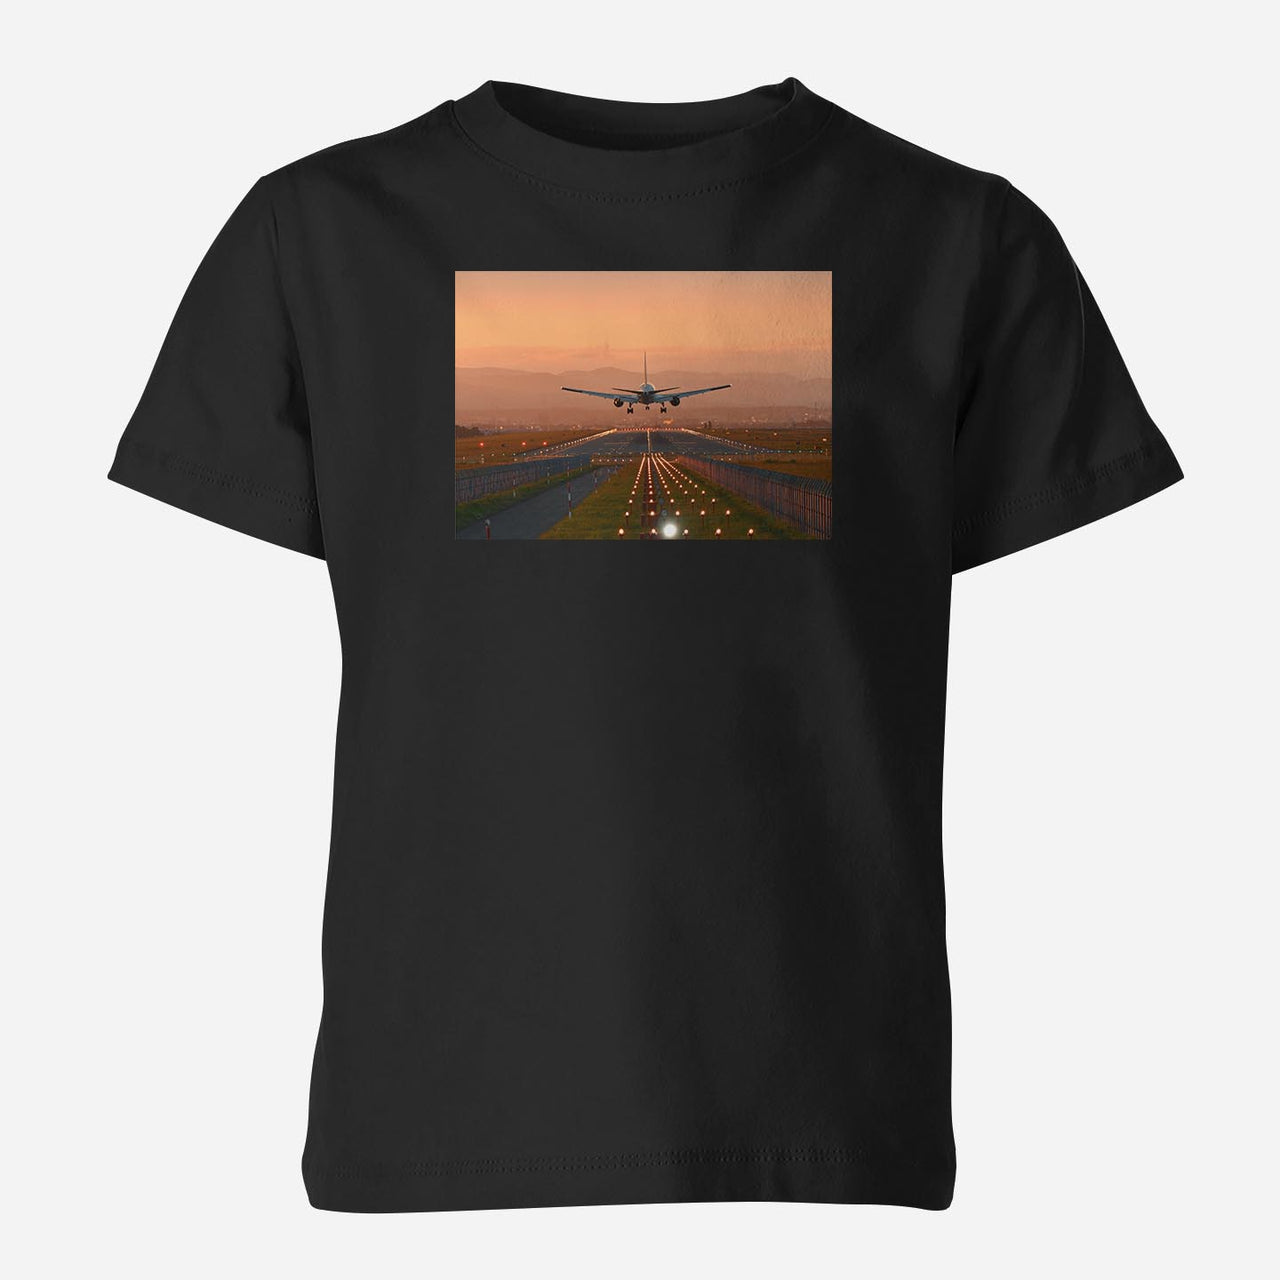 Super Cool Landing During Sunset Designed Children T-Shirts